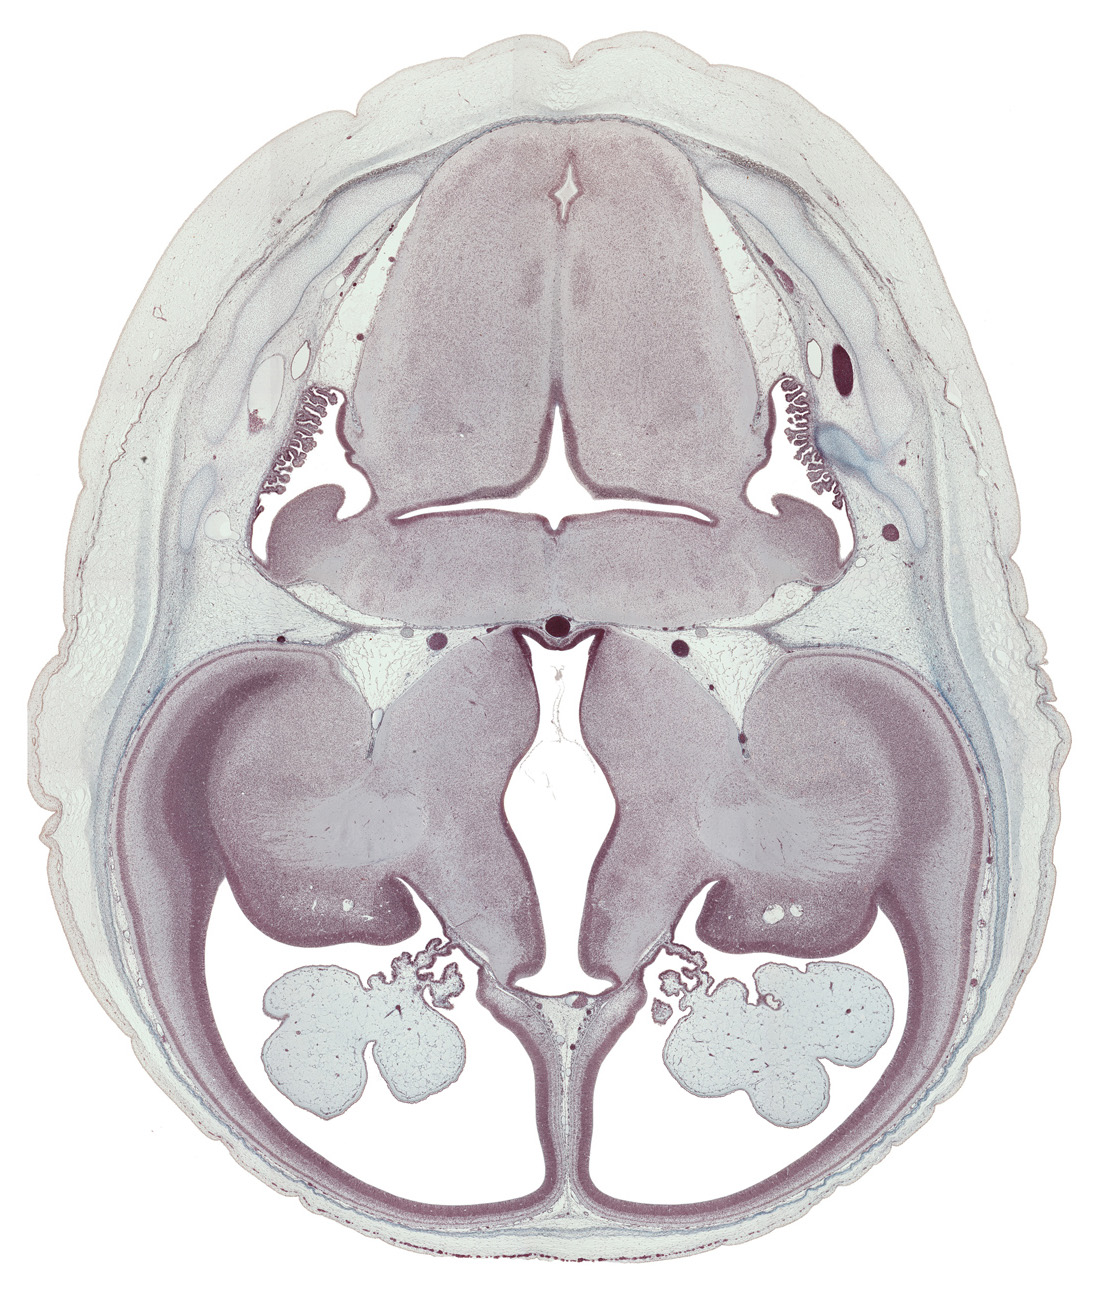 basilar artery, caudate nucleus, cephalic edge of dorsal thalamus, choroid plexus, cortical plate, edge of otic capsule, endolymphatic sac, fusion region with anterior choroidal artery, internal capsule, lateral recess of rhombencoel (fourth ventricle), lateral ventricular eminence (telencephalon), medial ventricular eminence (diencephalon), oculomotor nerve (CN III), posterior communicating artery, rhombencoel (fourth ventricle), supra-occipital cartilage, tegmentum of pons, trochlear nerve (CN IV)